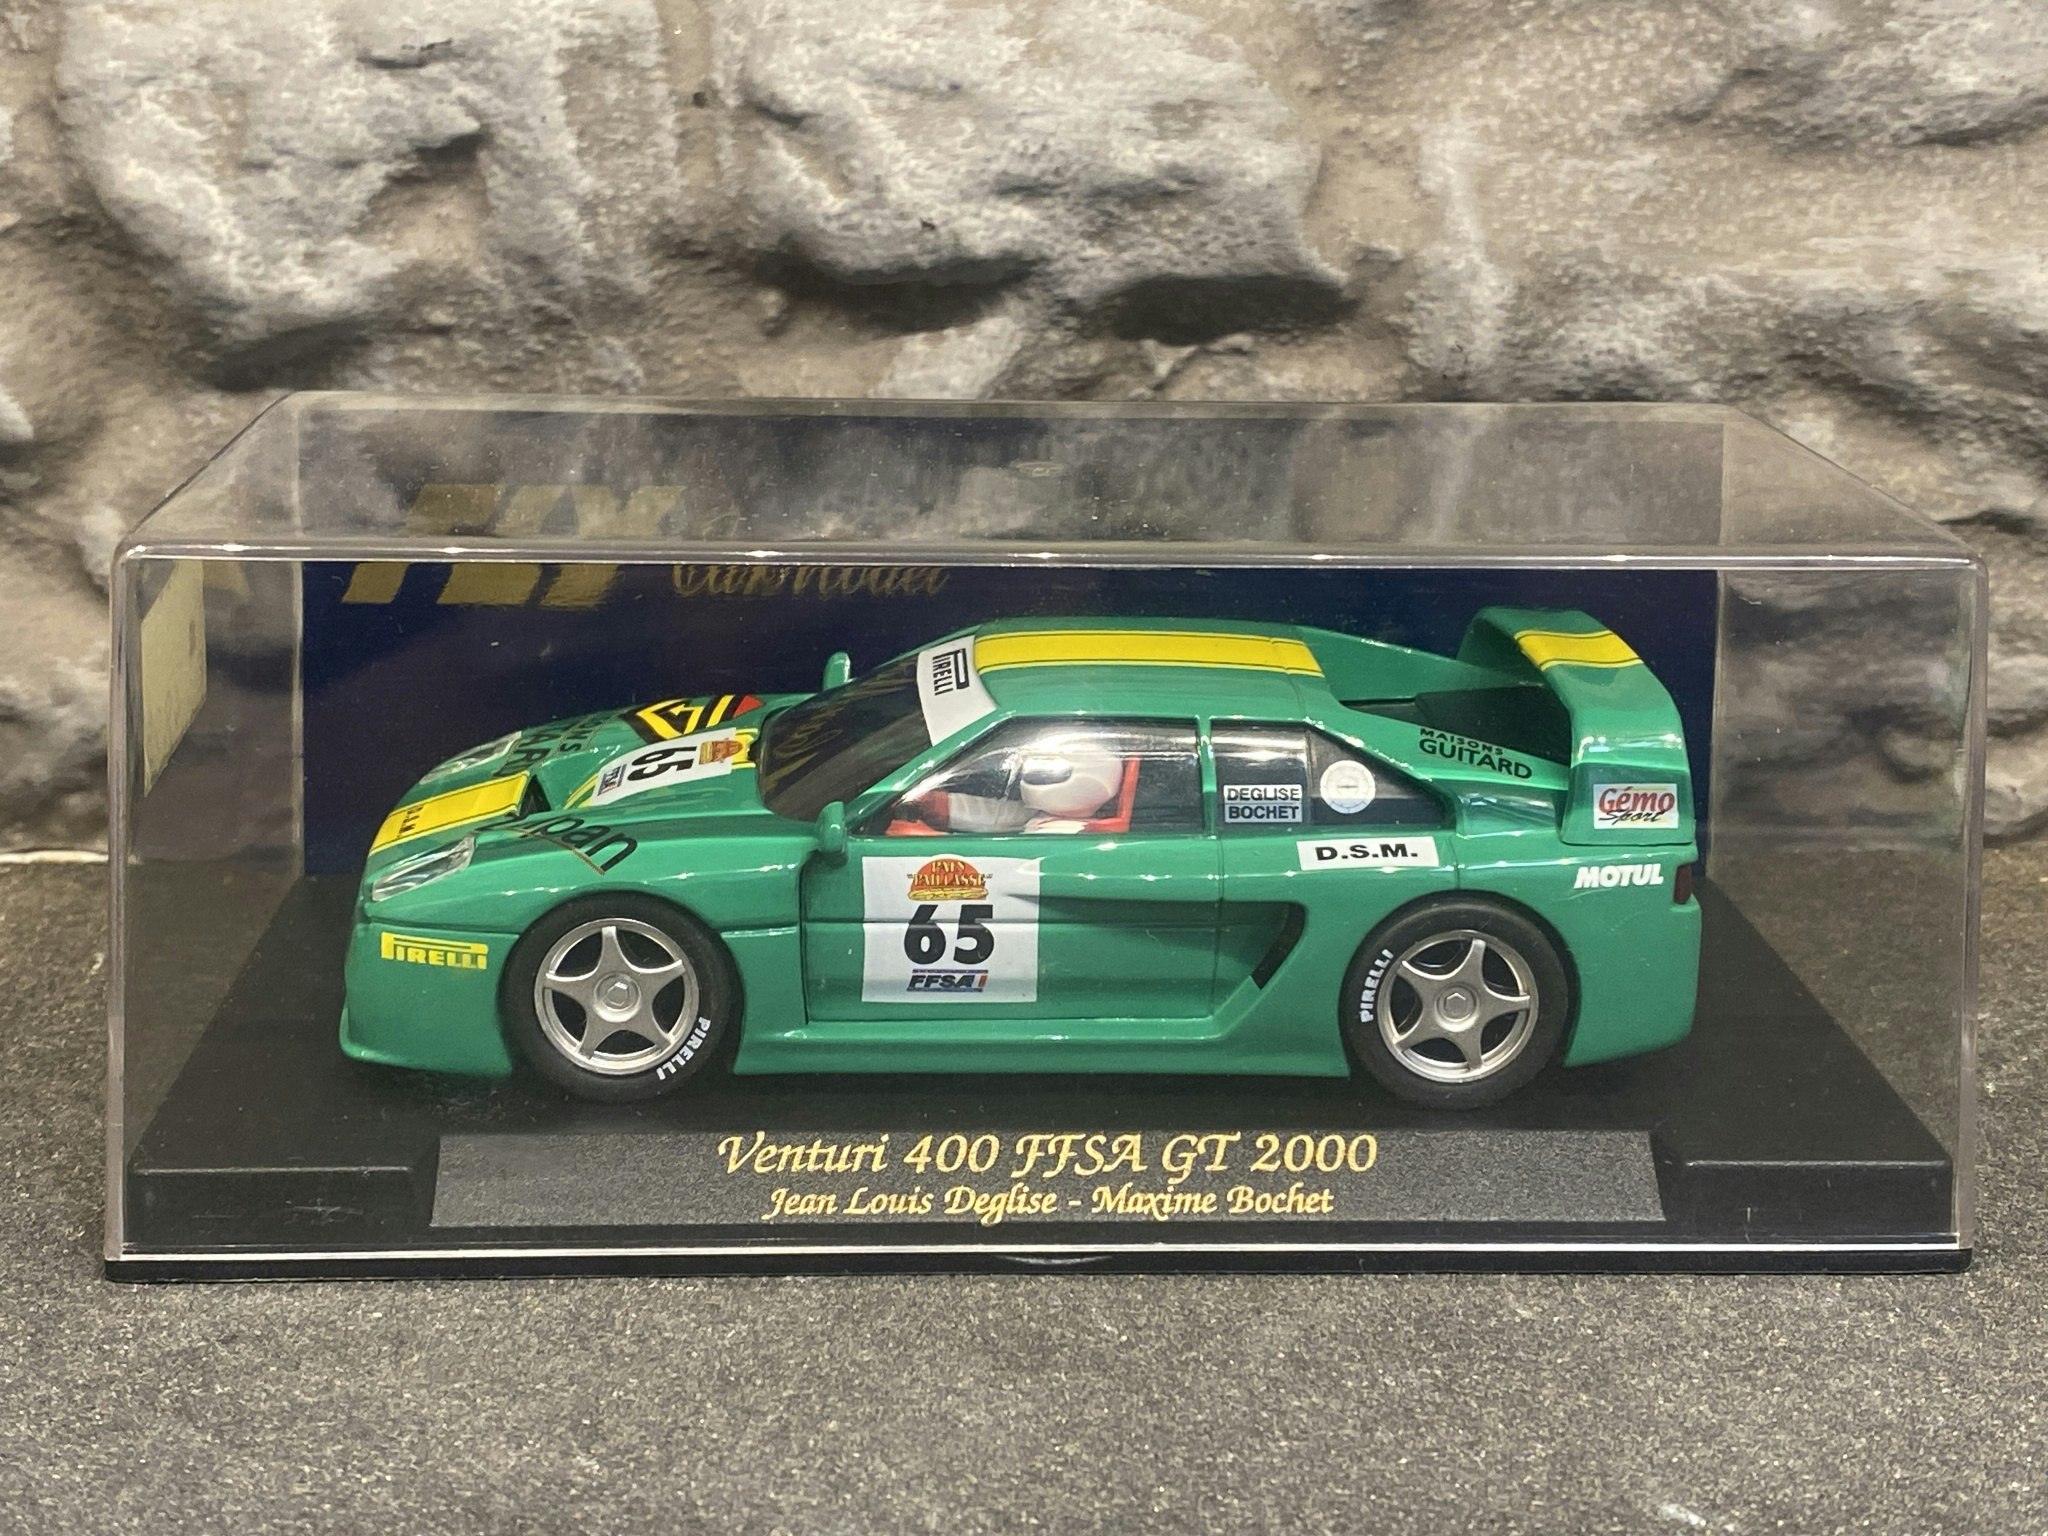 Skala 1/32 Analog FLY slotcar/ Bil t Bilbana: VENTURI 400 - FFSA GT 2000, Green #65